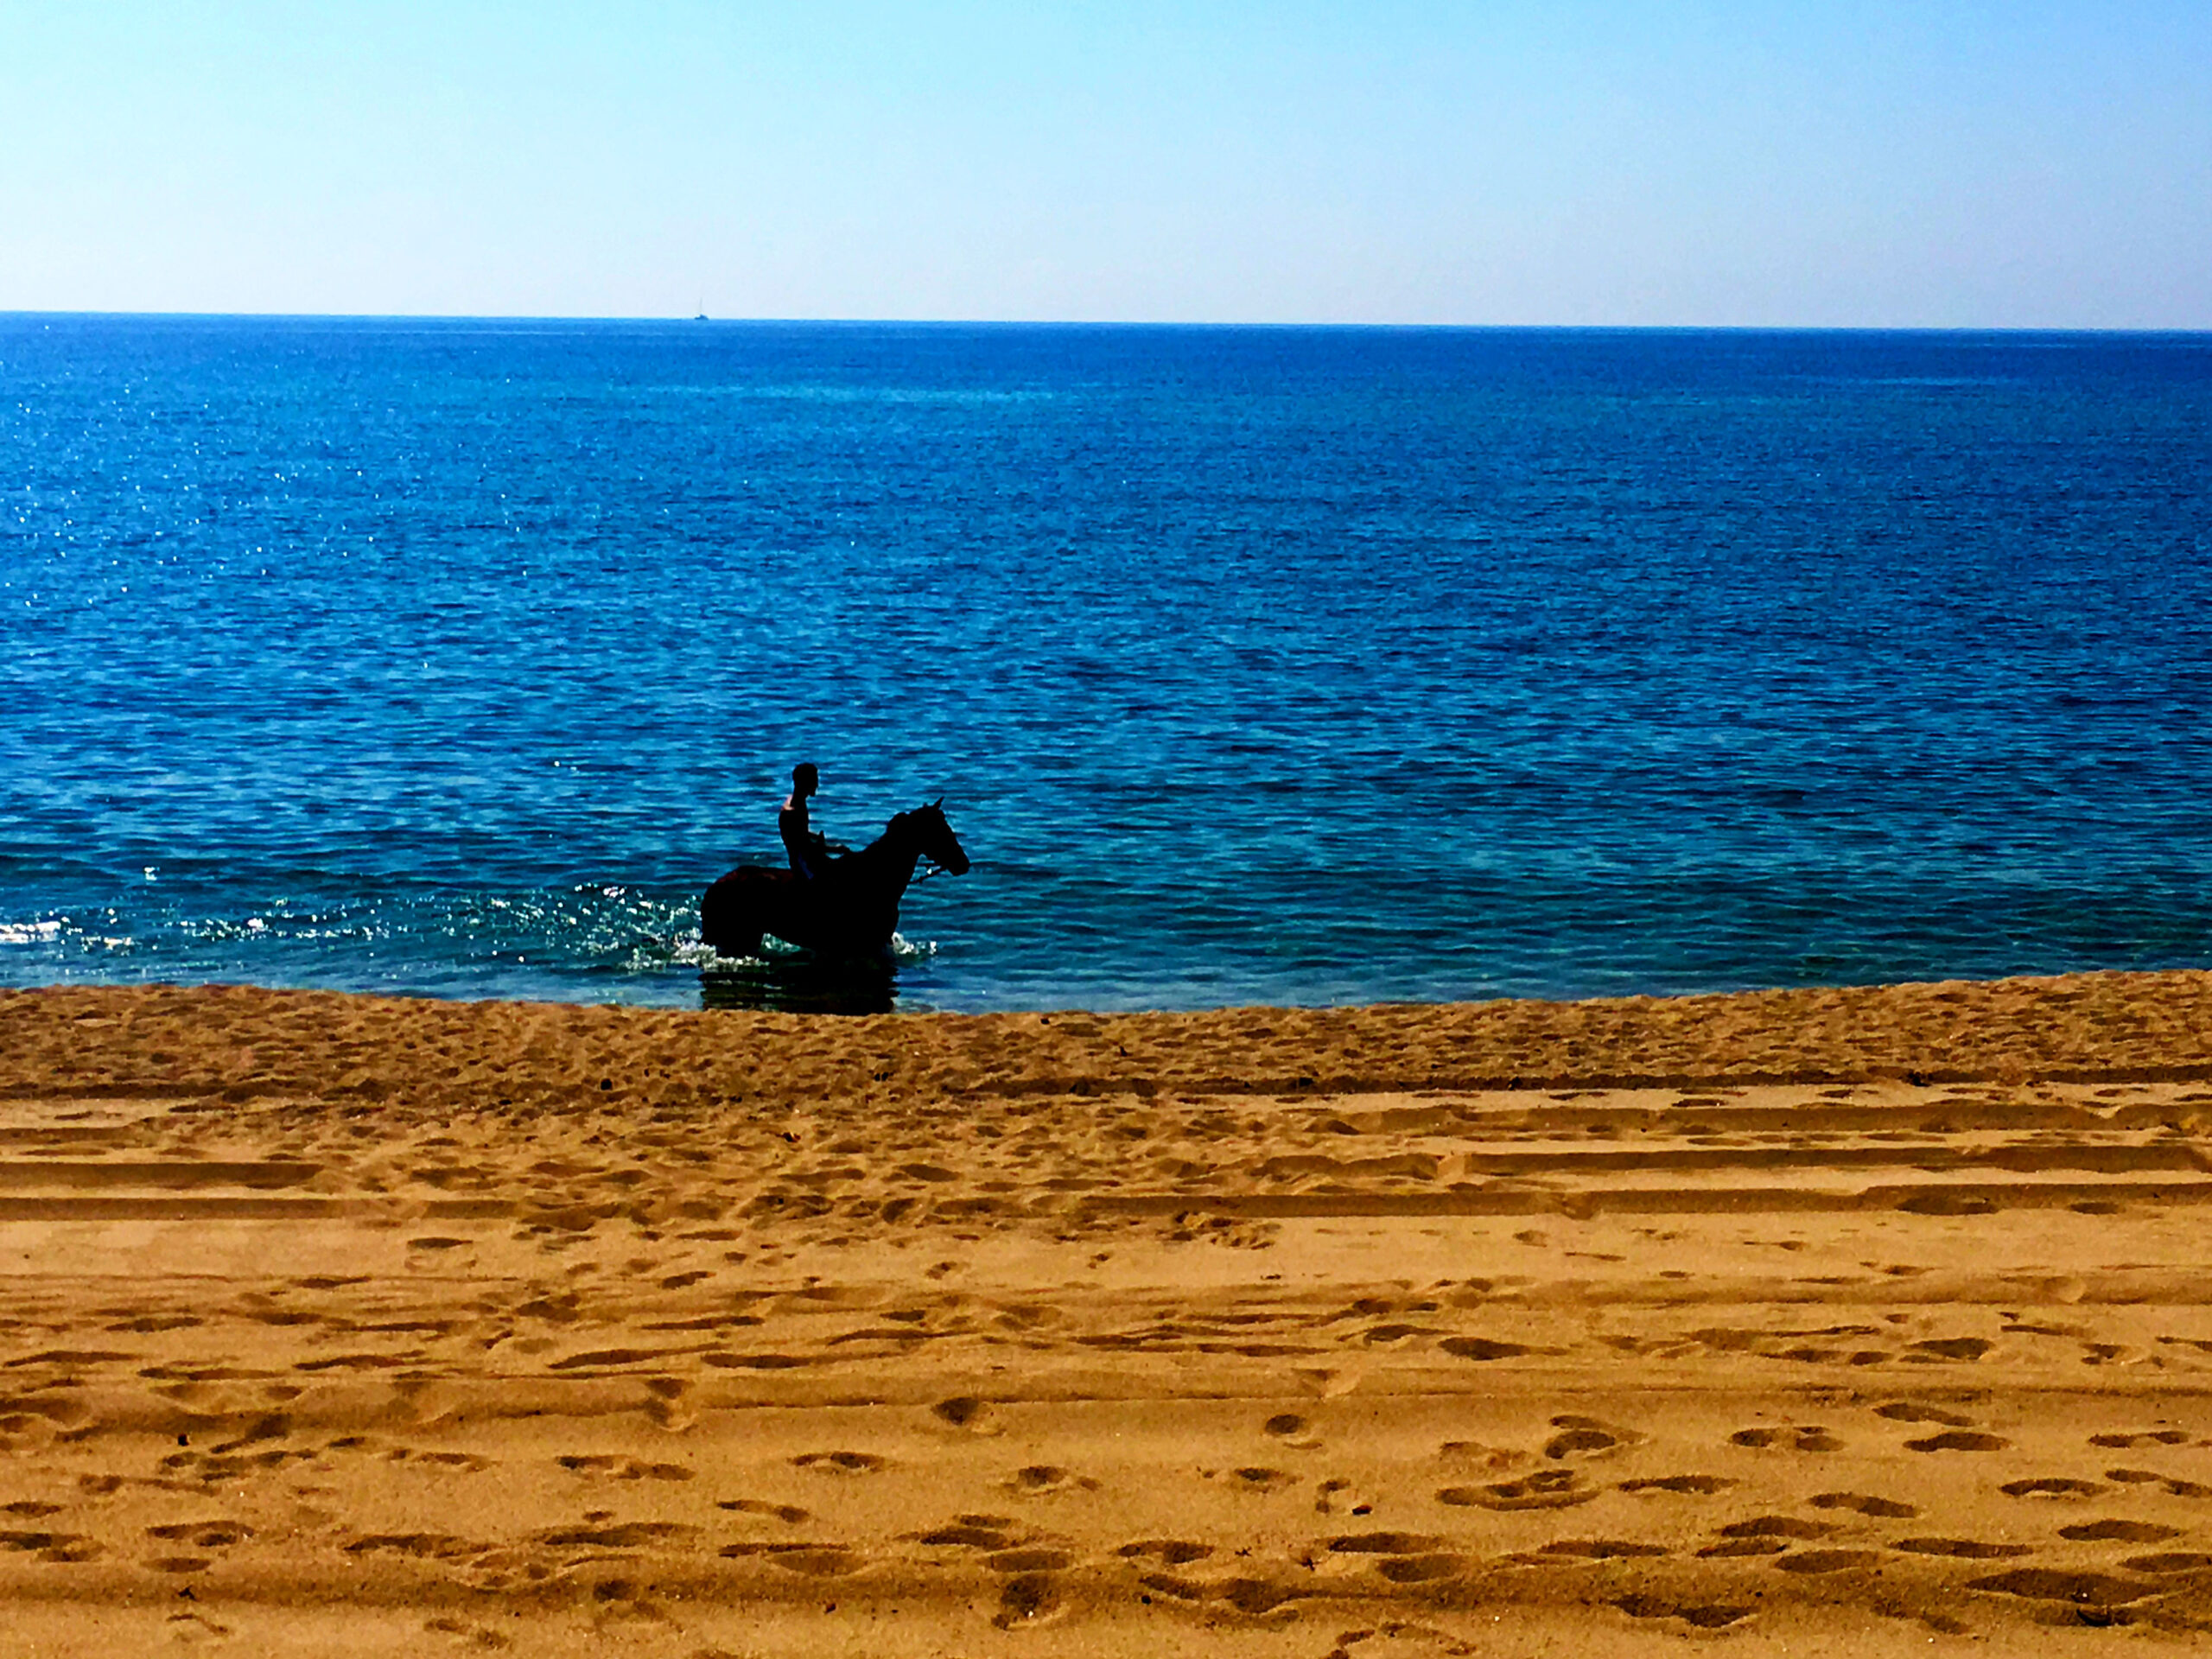 Cavaliere sulla spiaggia - Horse rider at the beach - Reiter am Strand